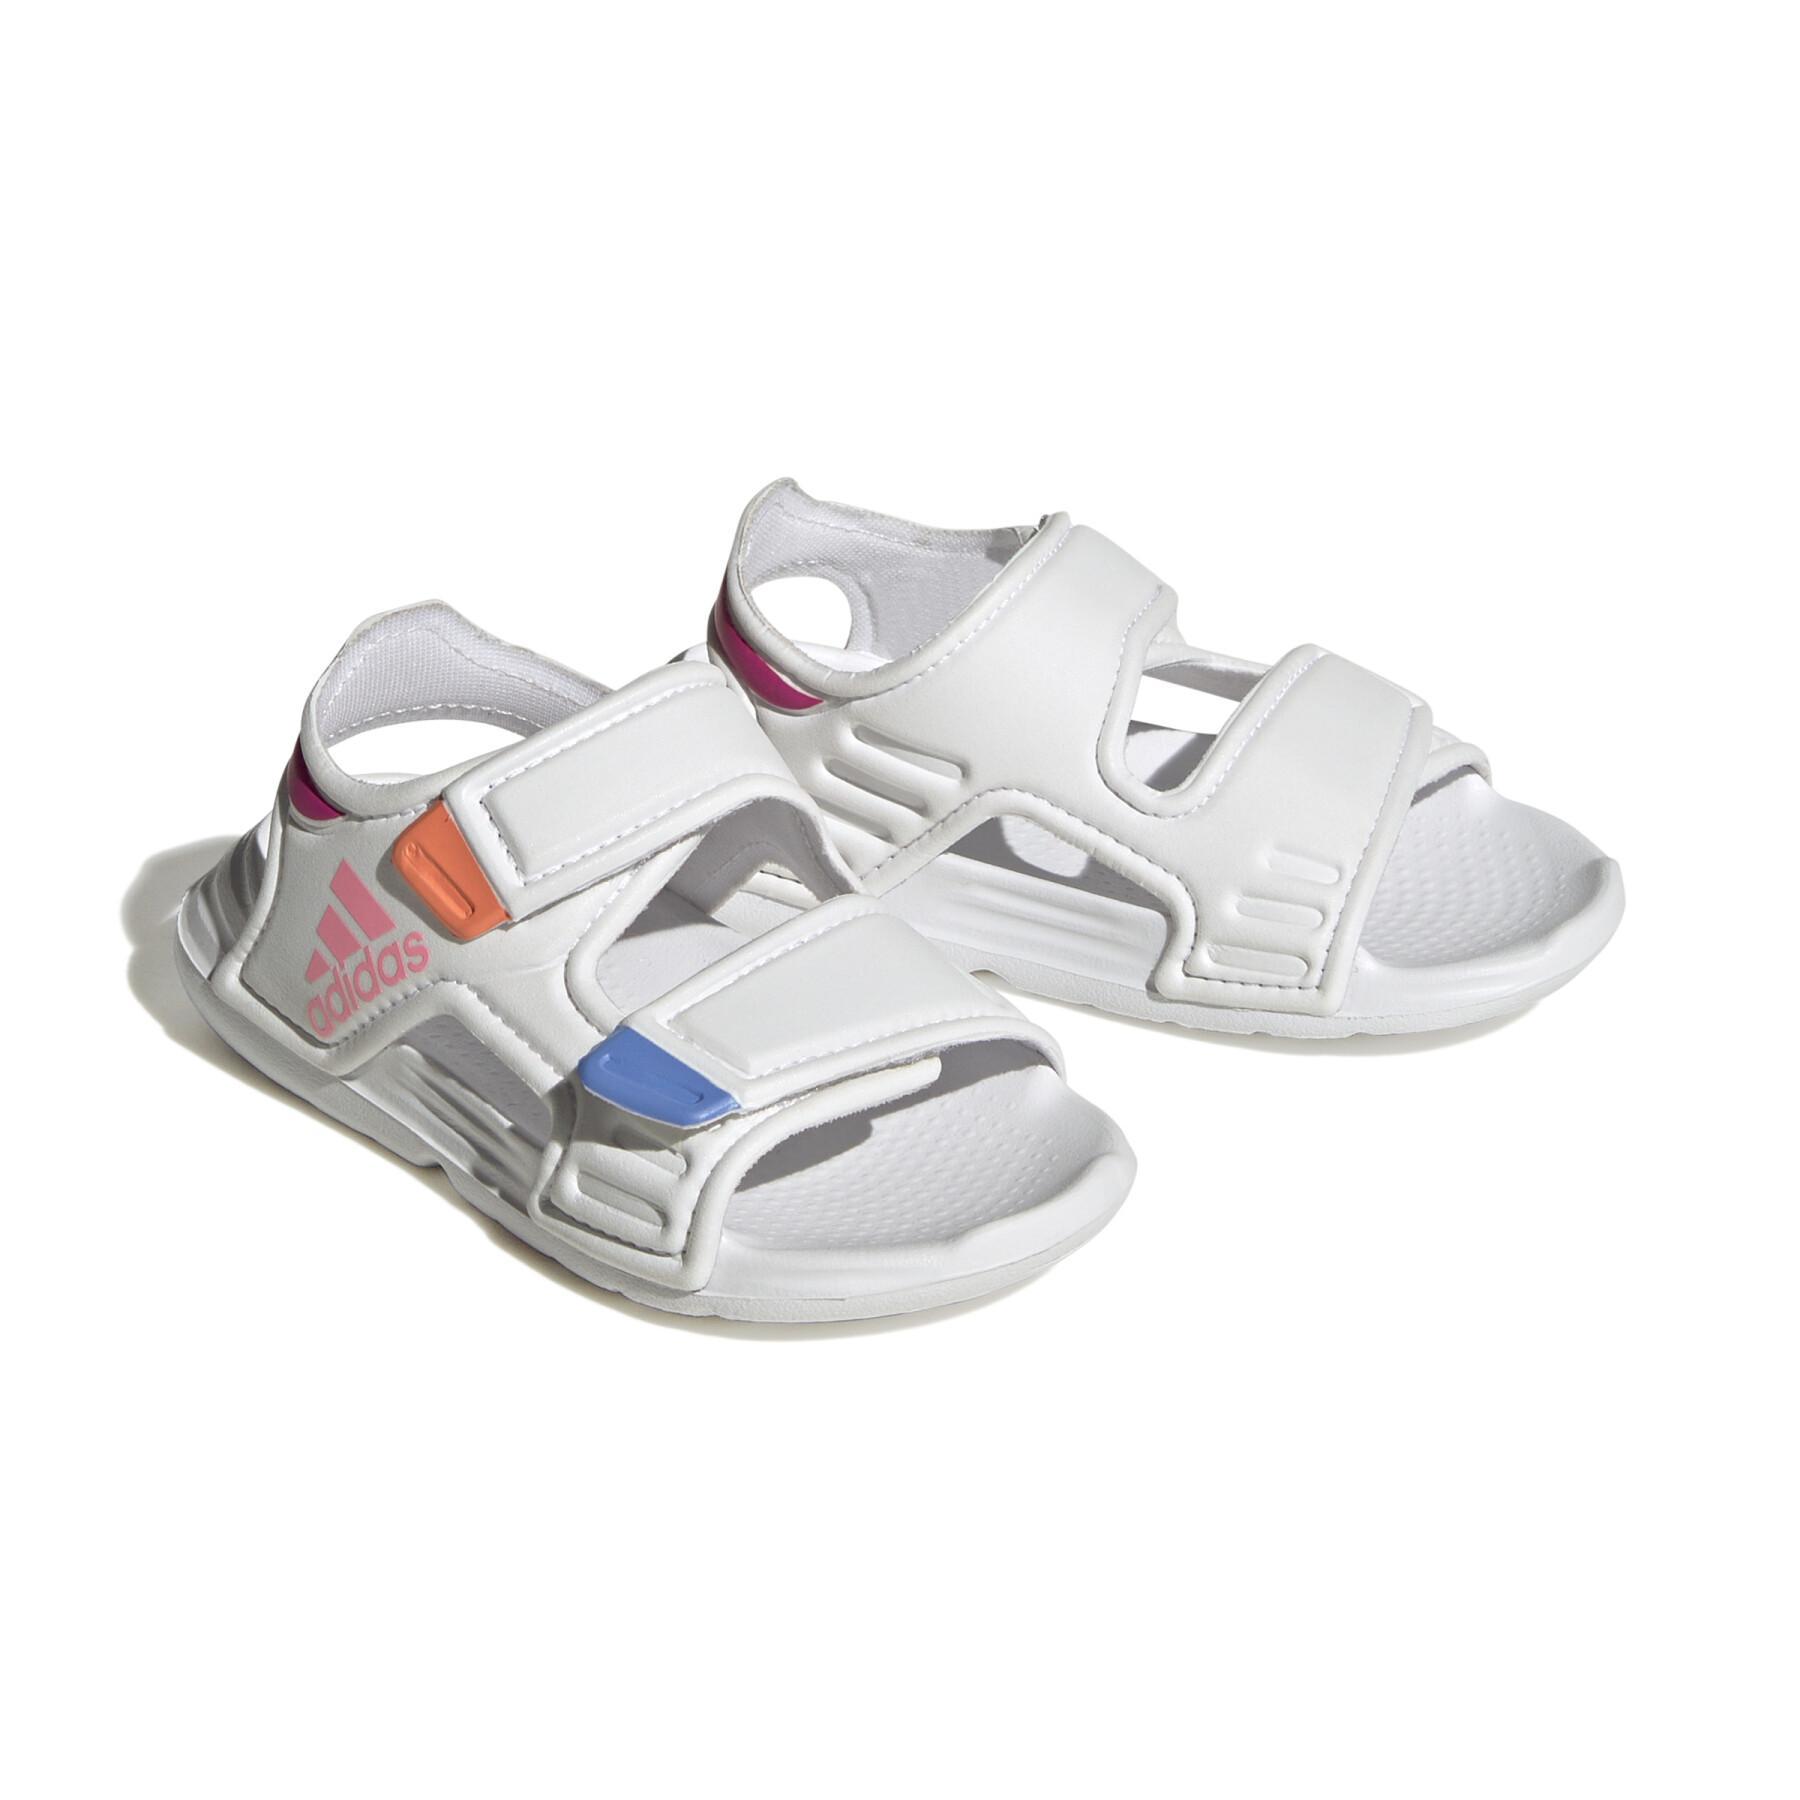 Baby sandals adidas Altaswim